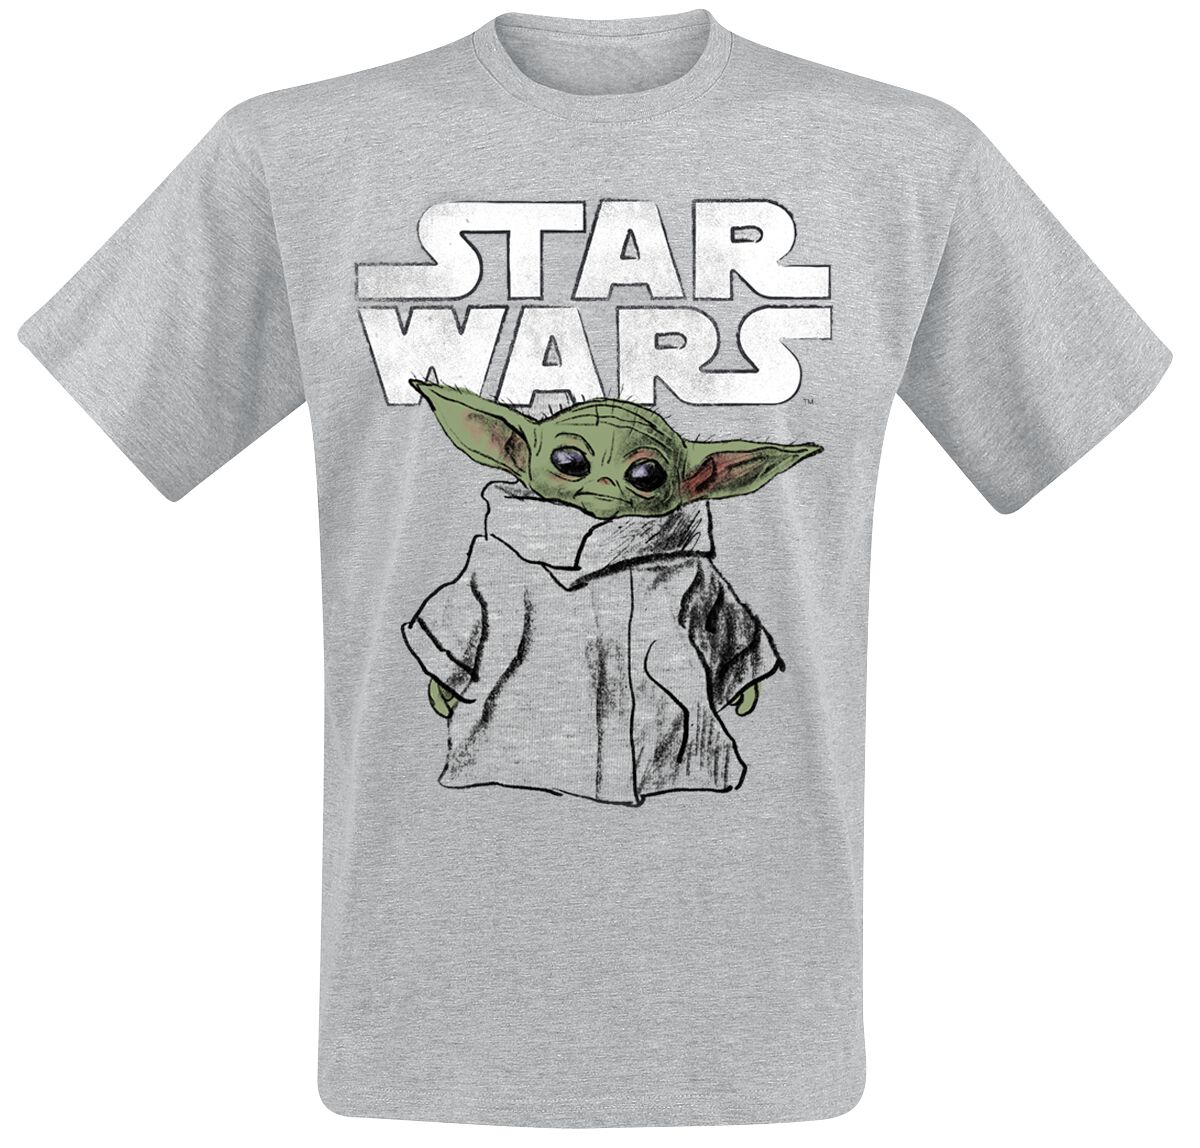 Star Wars The Mandalorian - Grogu - Sketch T-Shirt grau meliert in 3XL